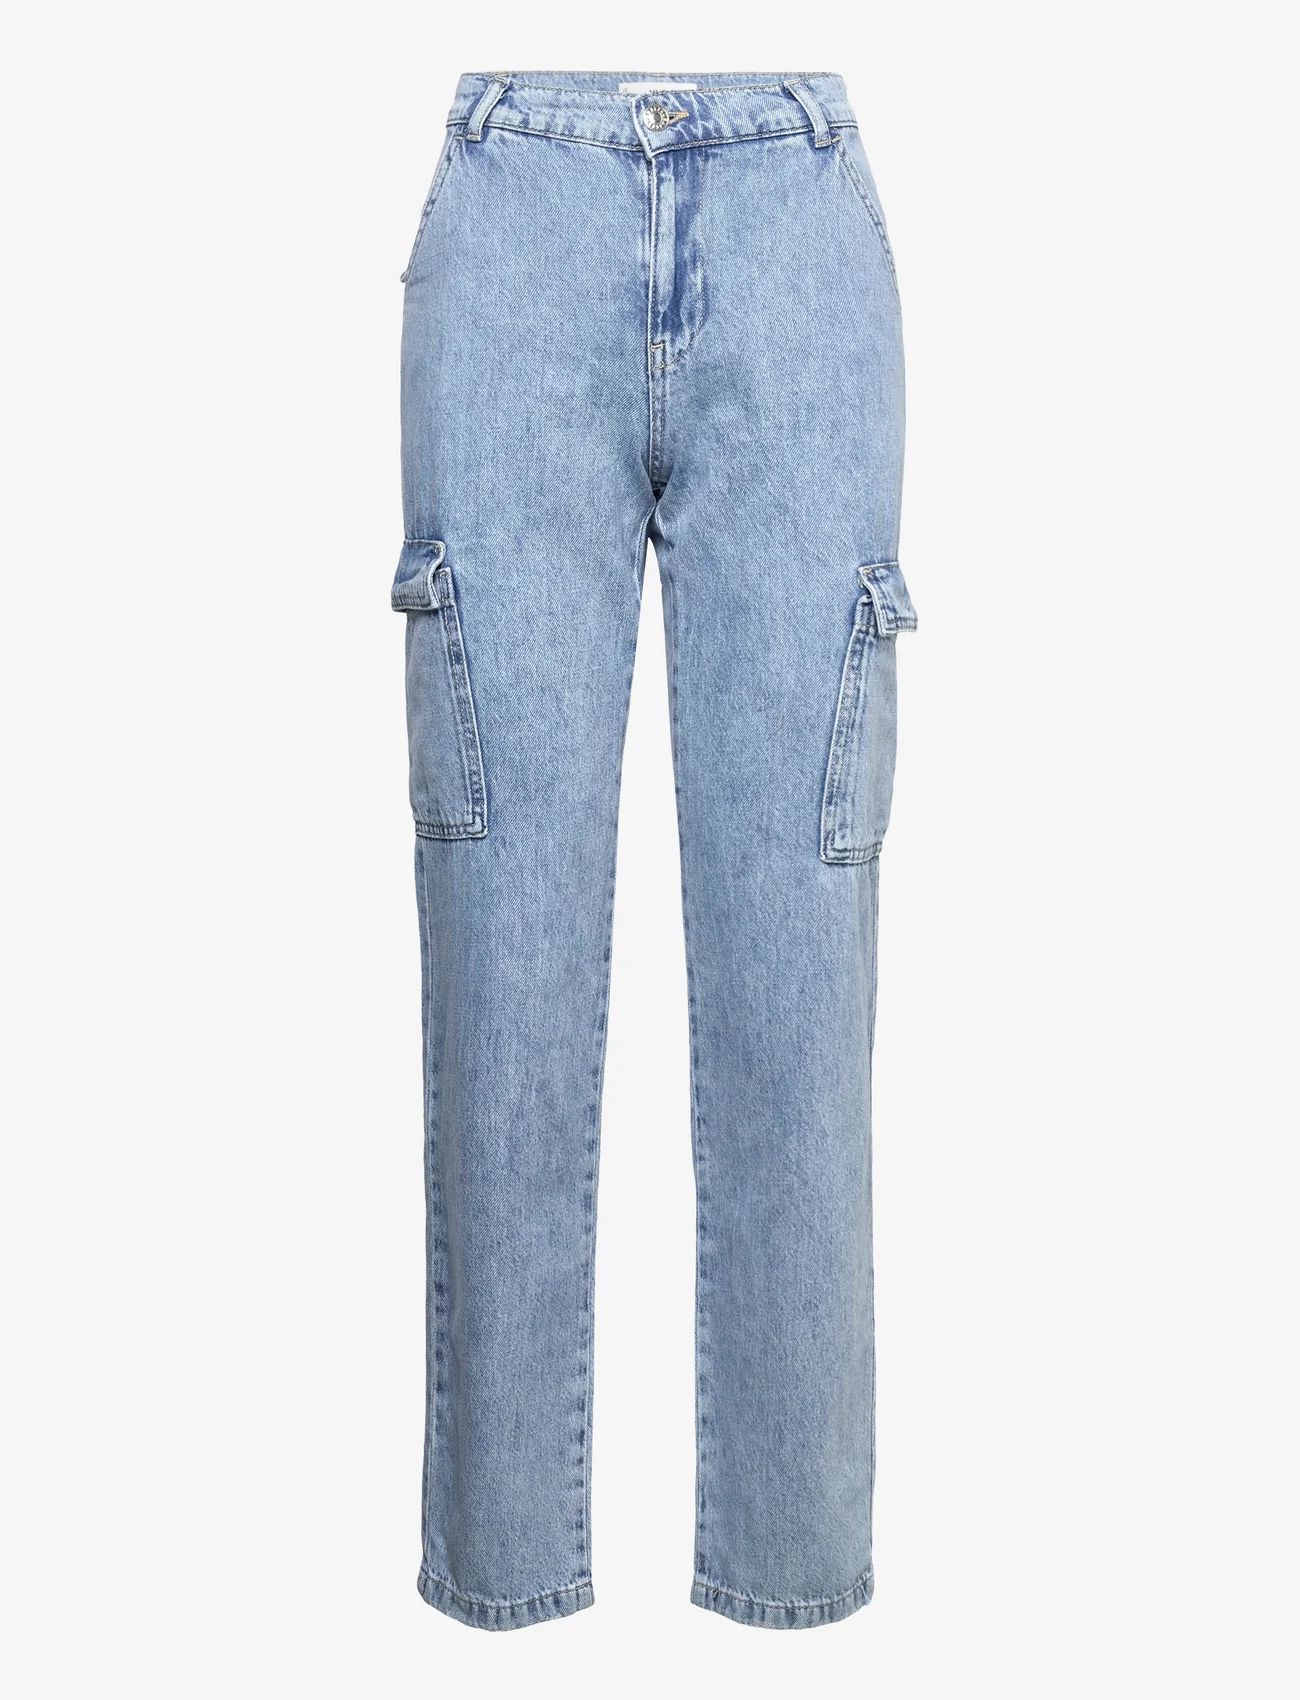 Mango - Pocket cargo jeans - straight jeans - open blue - 0